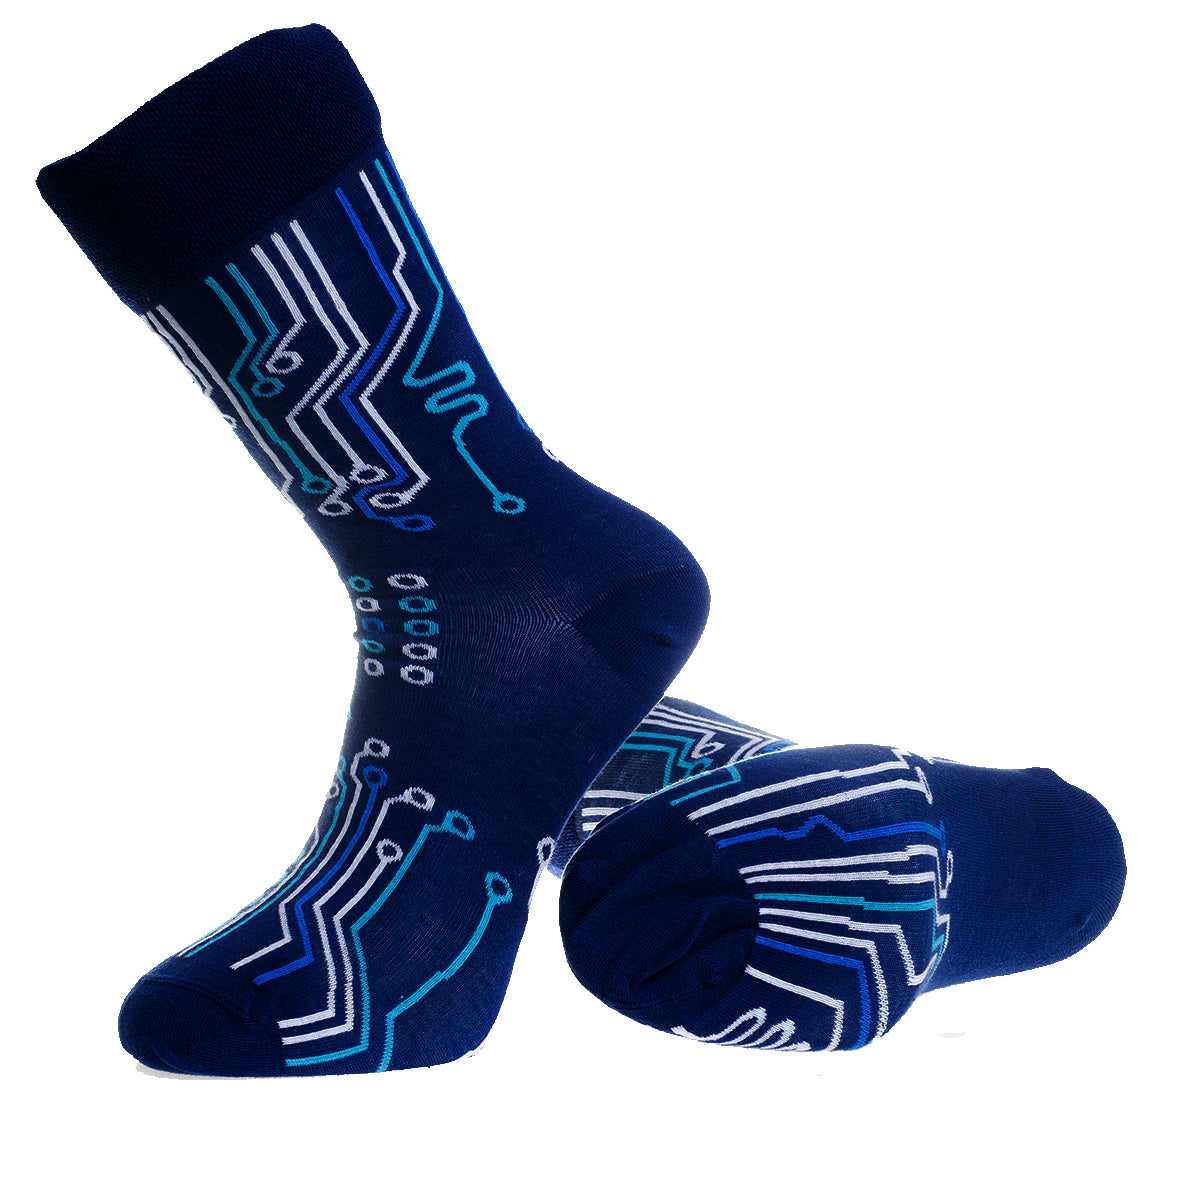 Dark Blue Printed -European Made - Egyptian Cotton Socks - Premium Cotton Fun socks with Soft Elastic